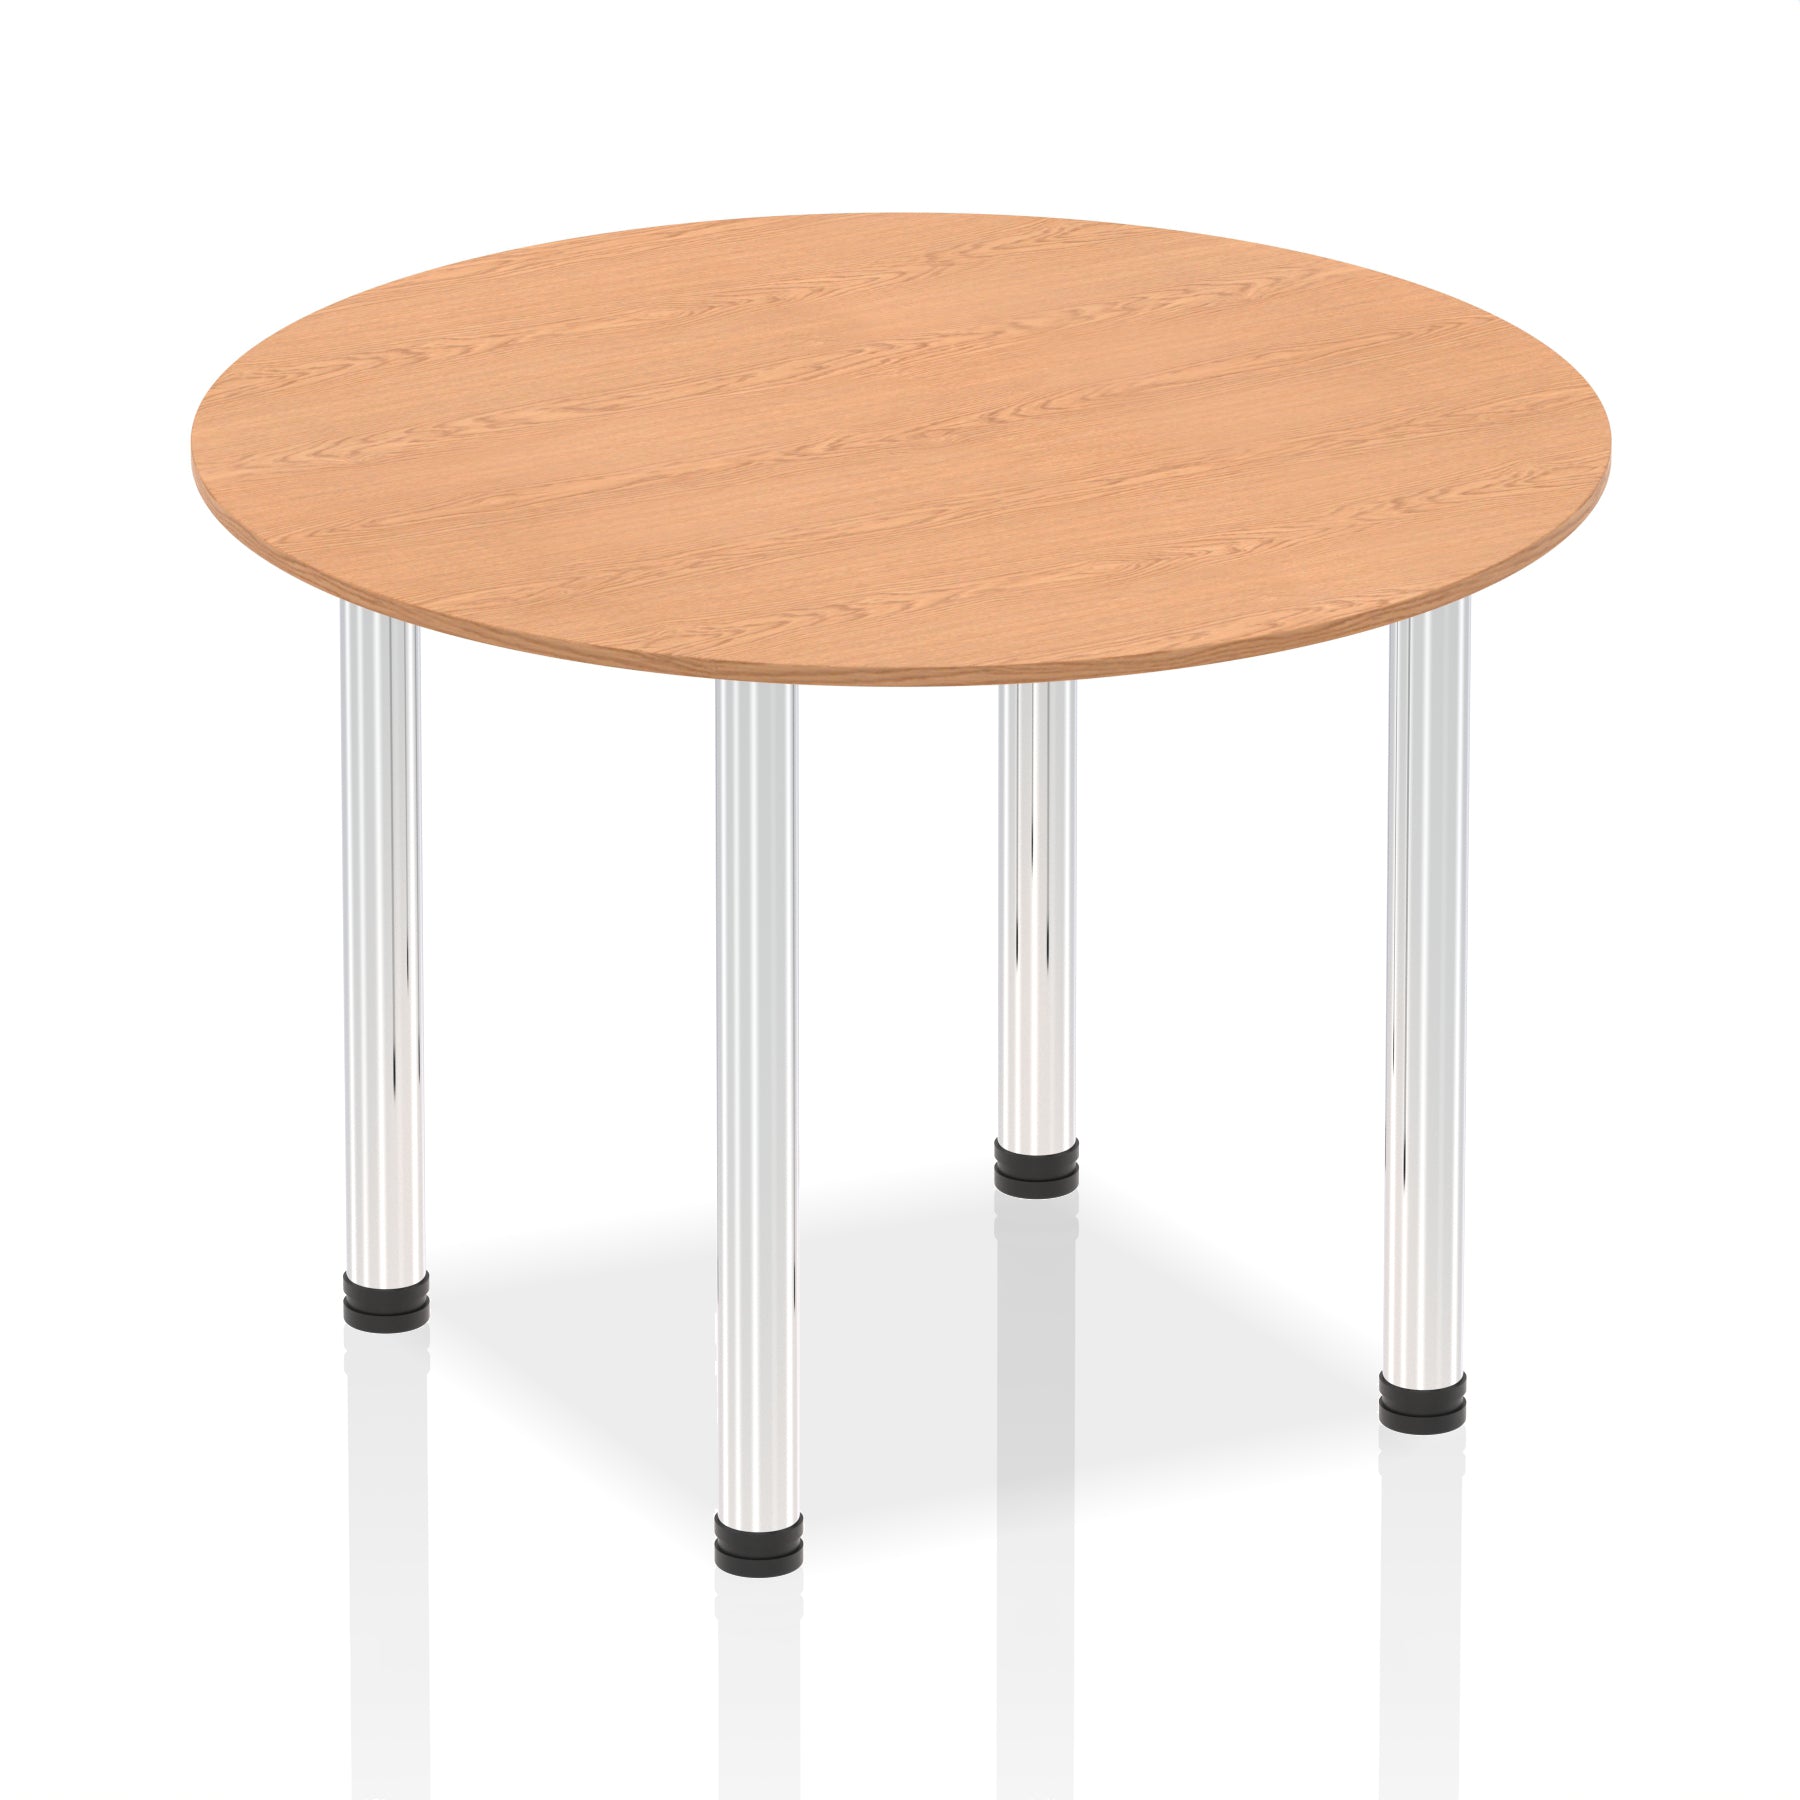 Impulse Round Table With Post Leg